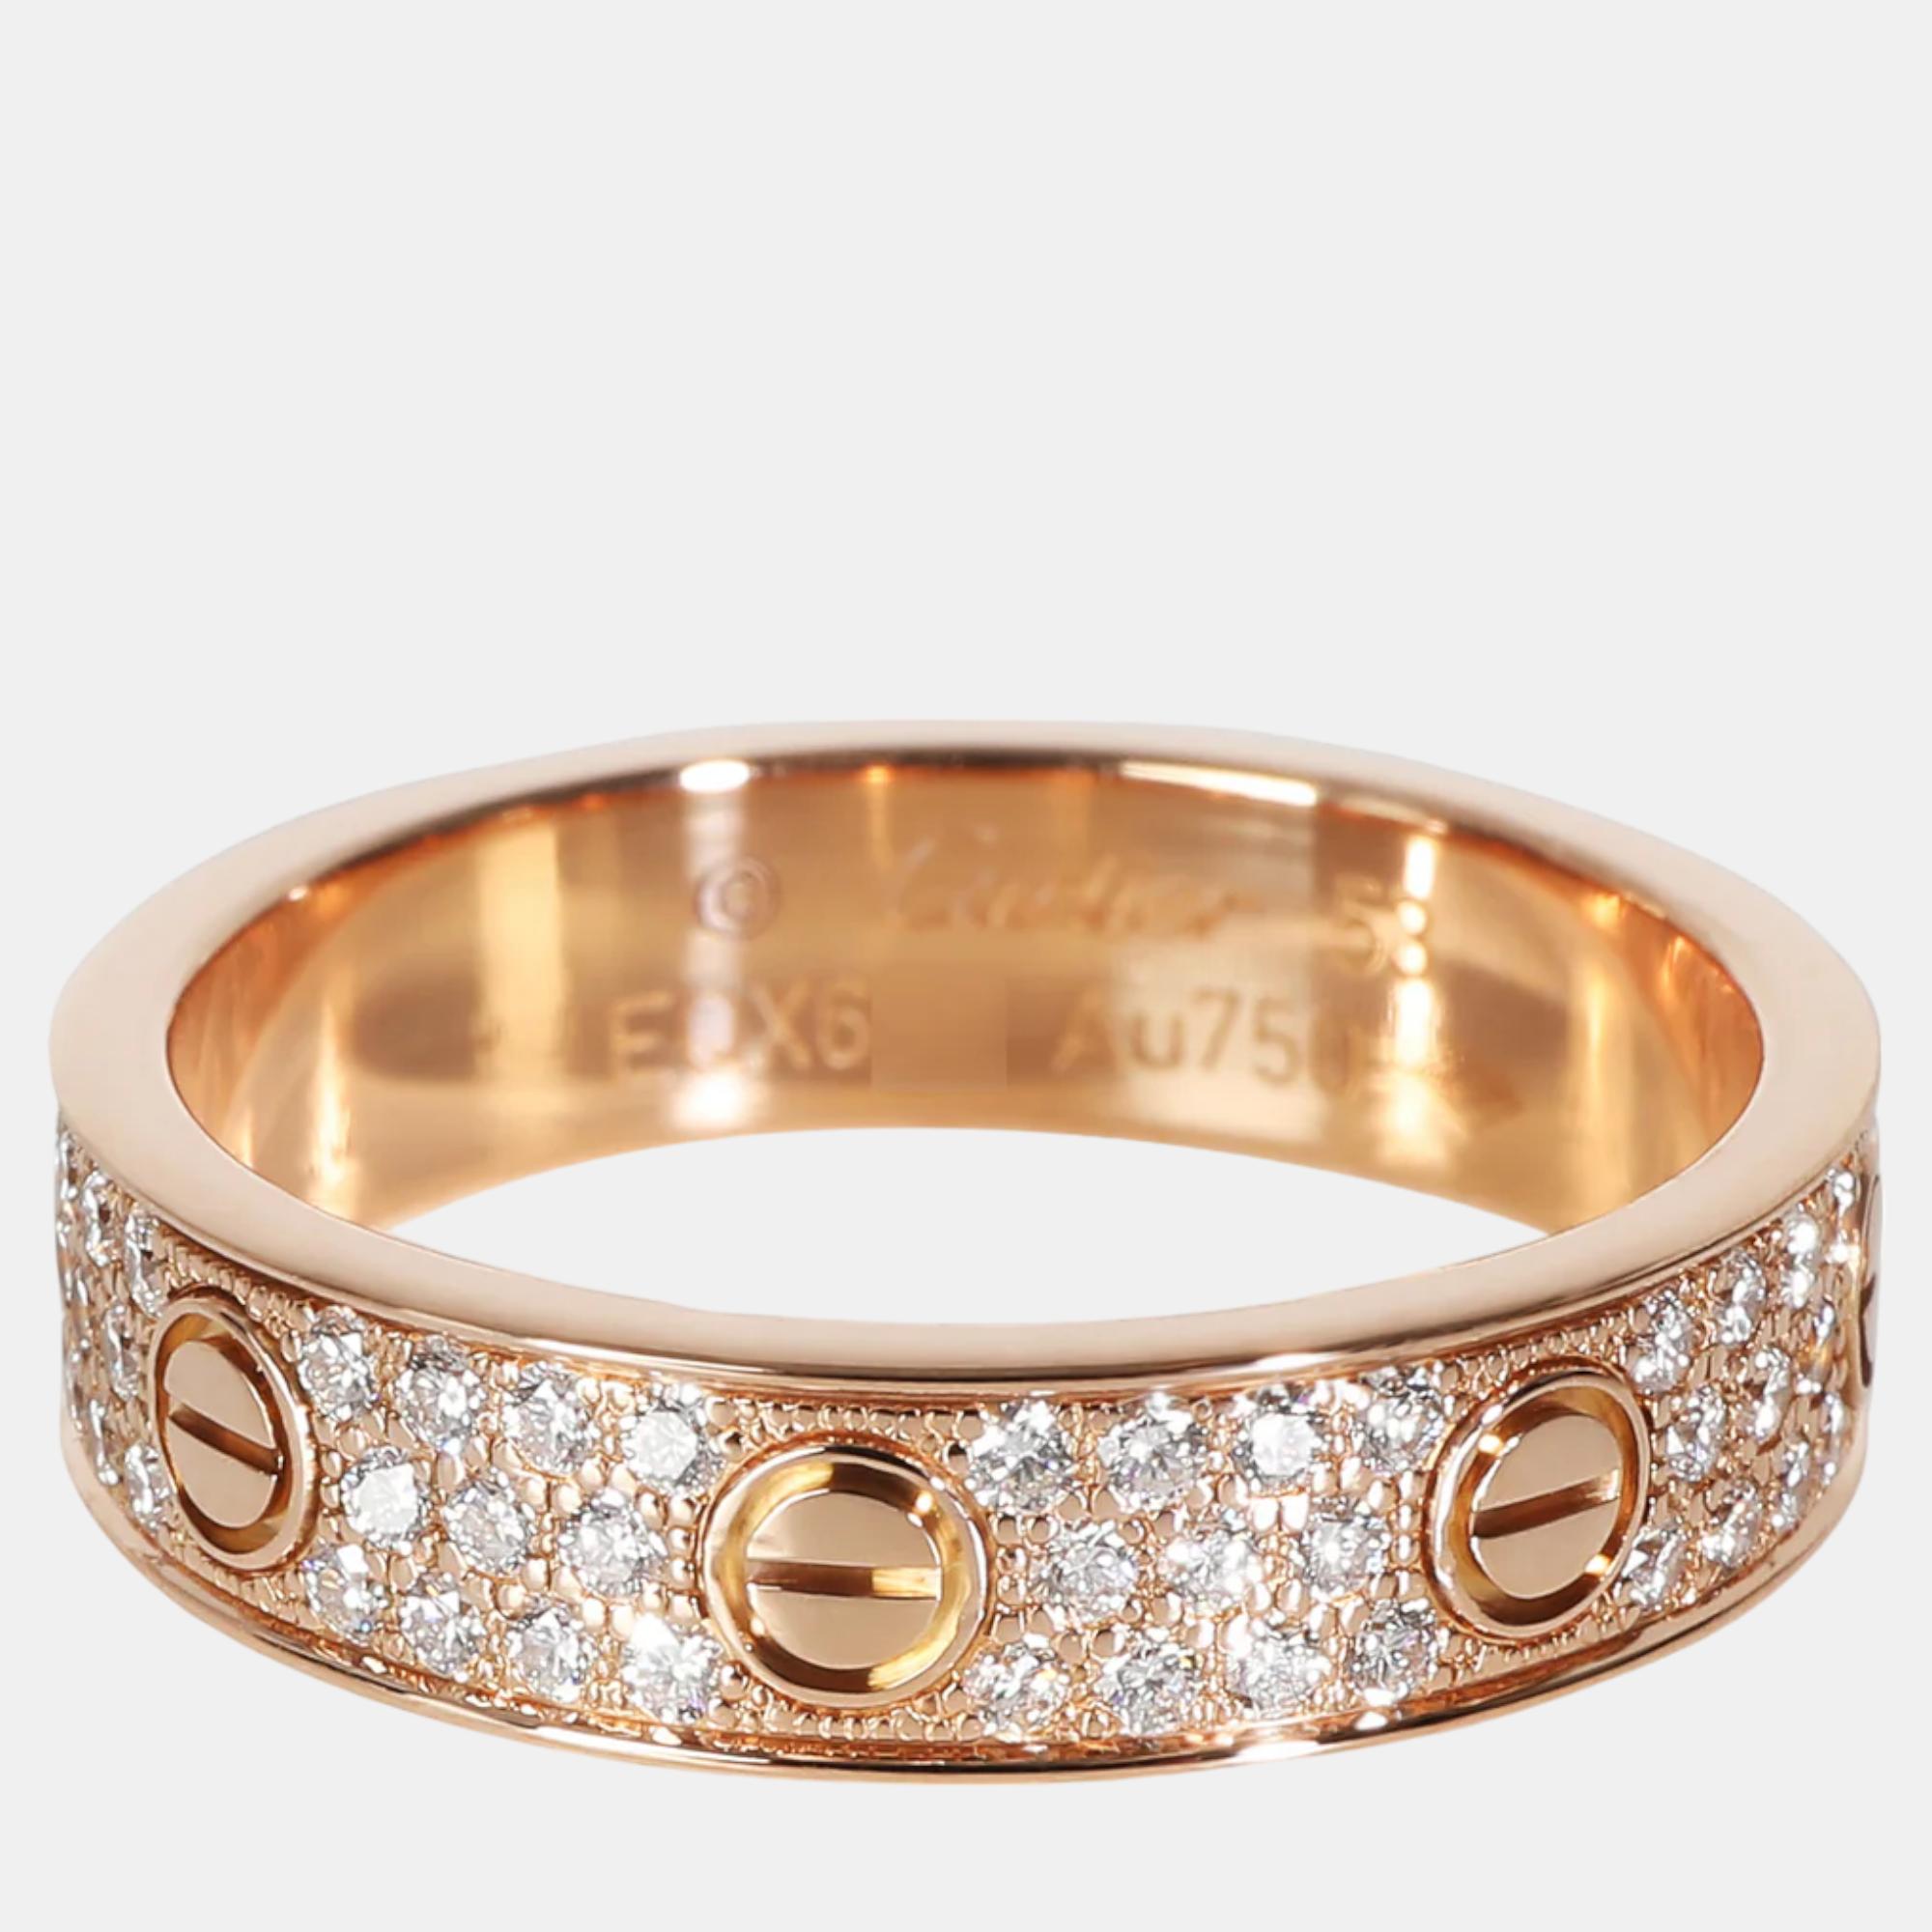 Cartier rose gold diamond paved love wedding band ring